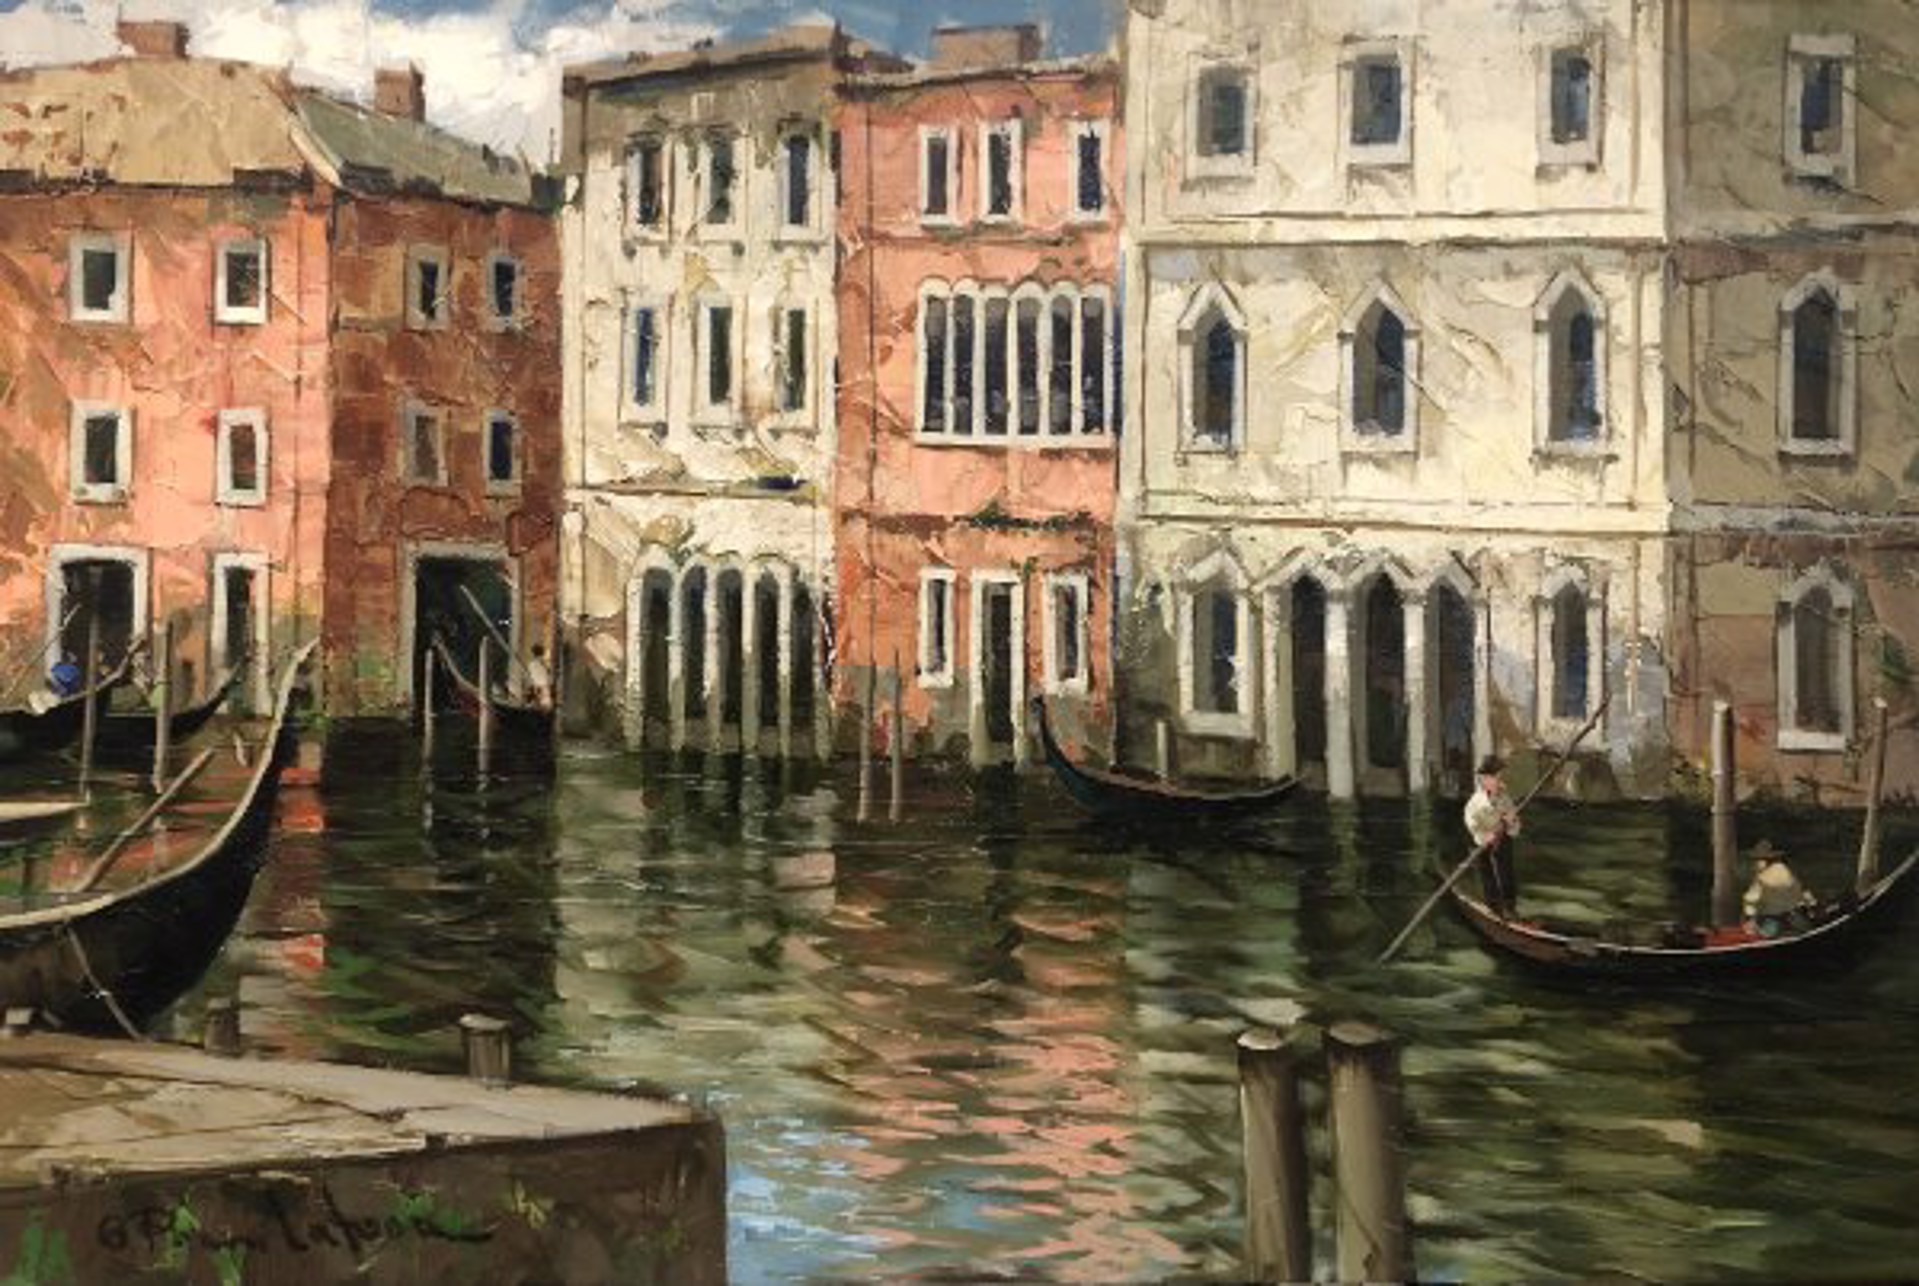 Gondolier in Venice by Pierre Latour